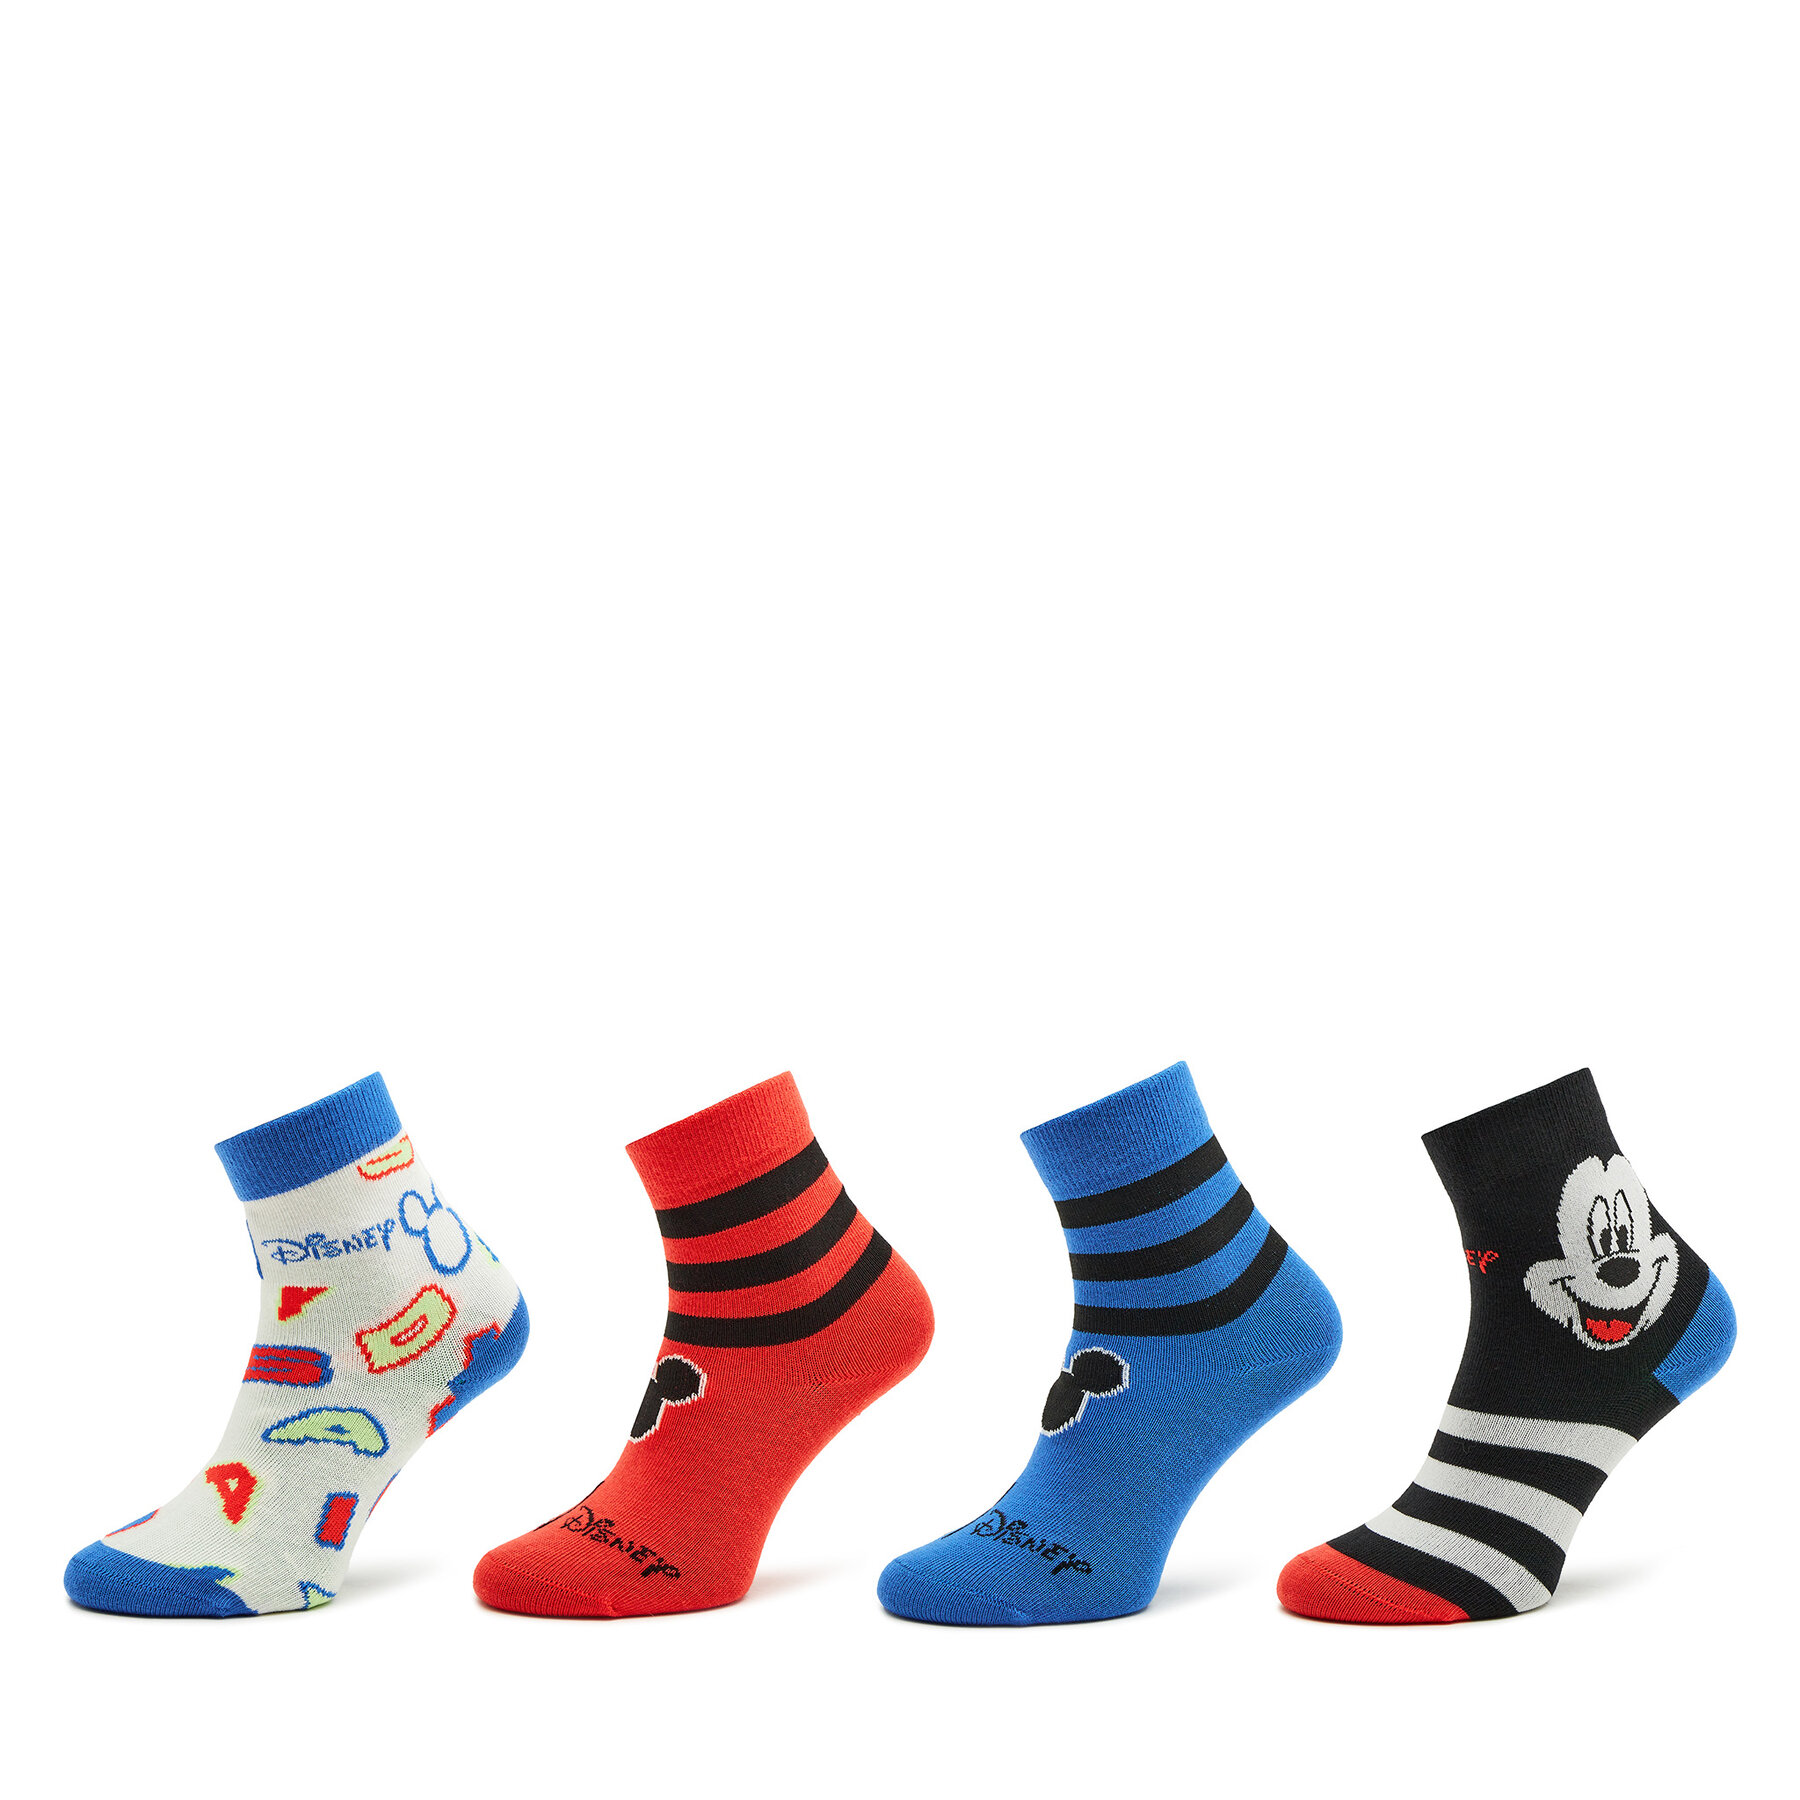 3er-Set hohe Kindersocken adidas Mickey Mouse Crew Socks 3 Pairs IB6776 Black/Broyal/Cwhite von Adidas